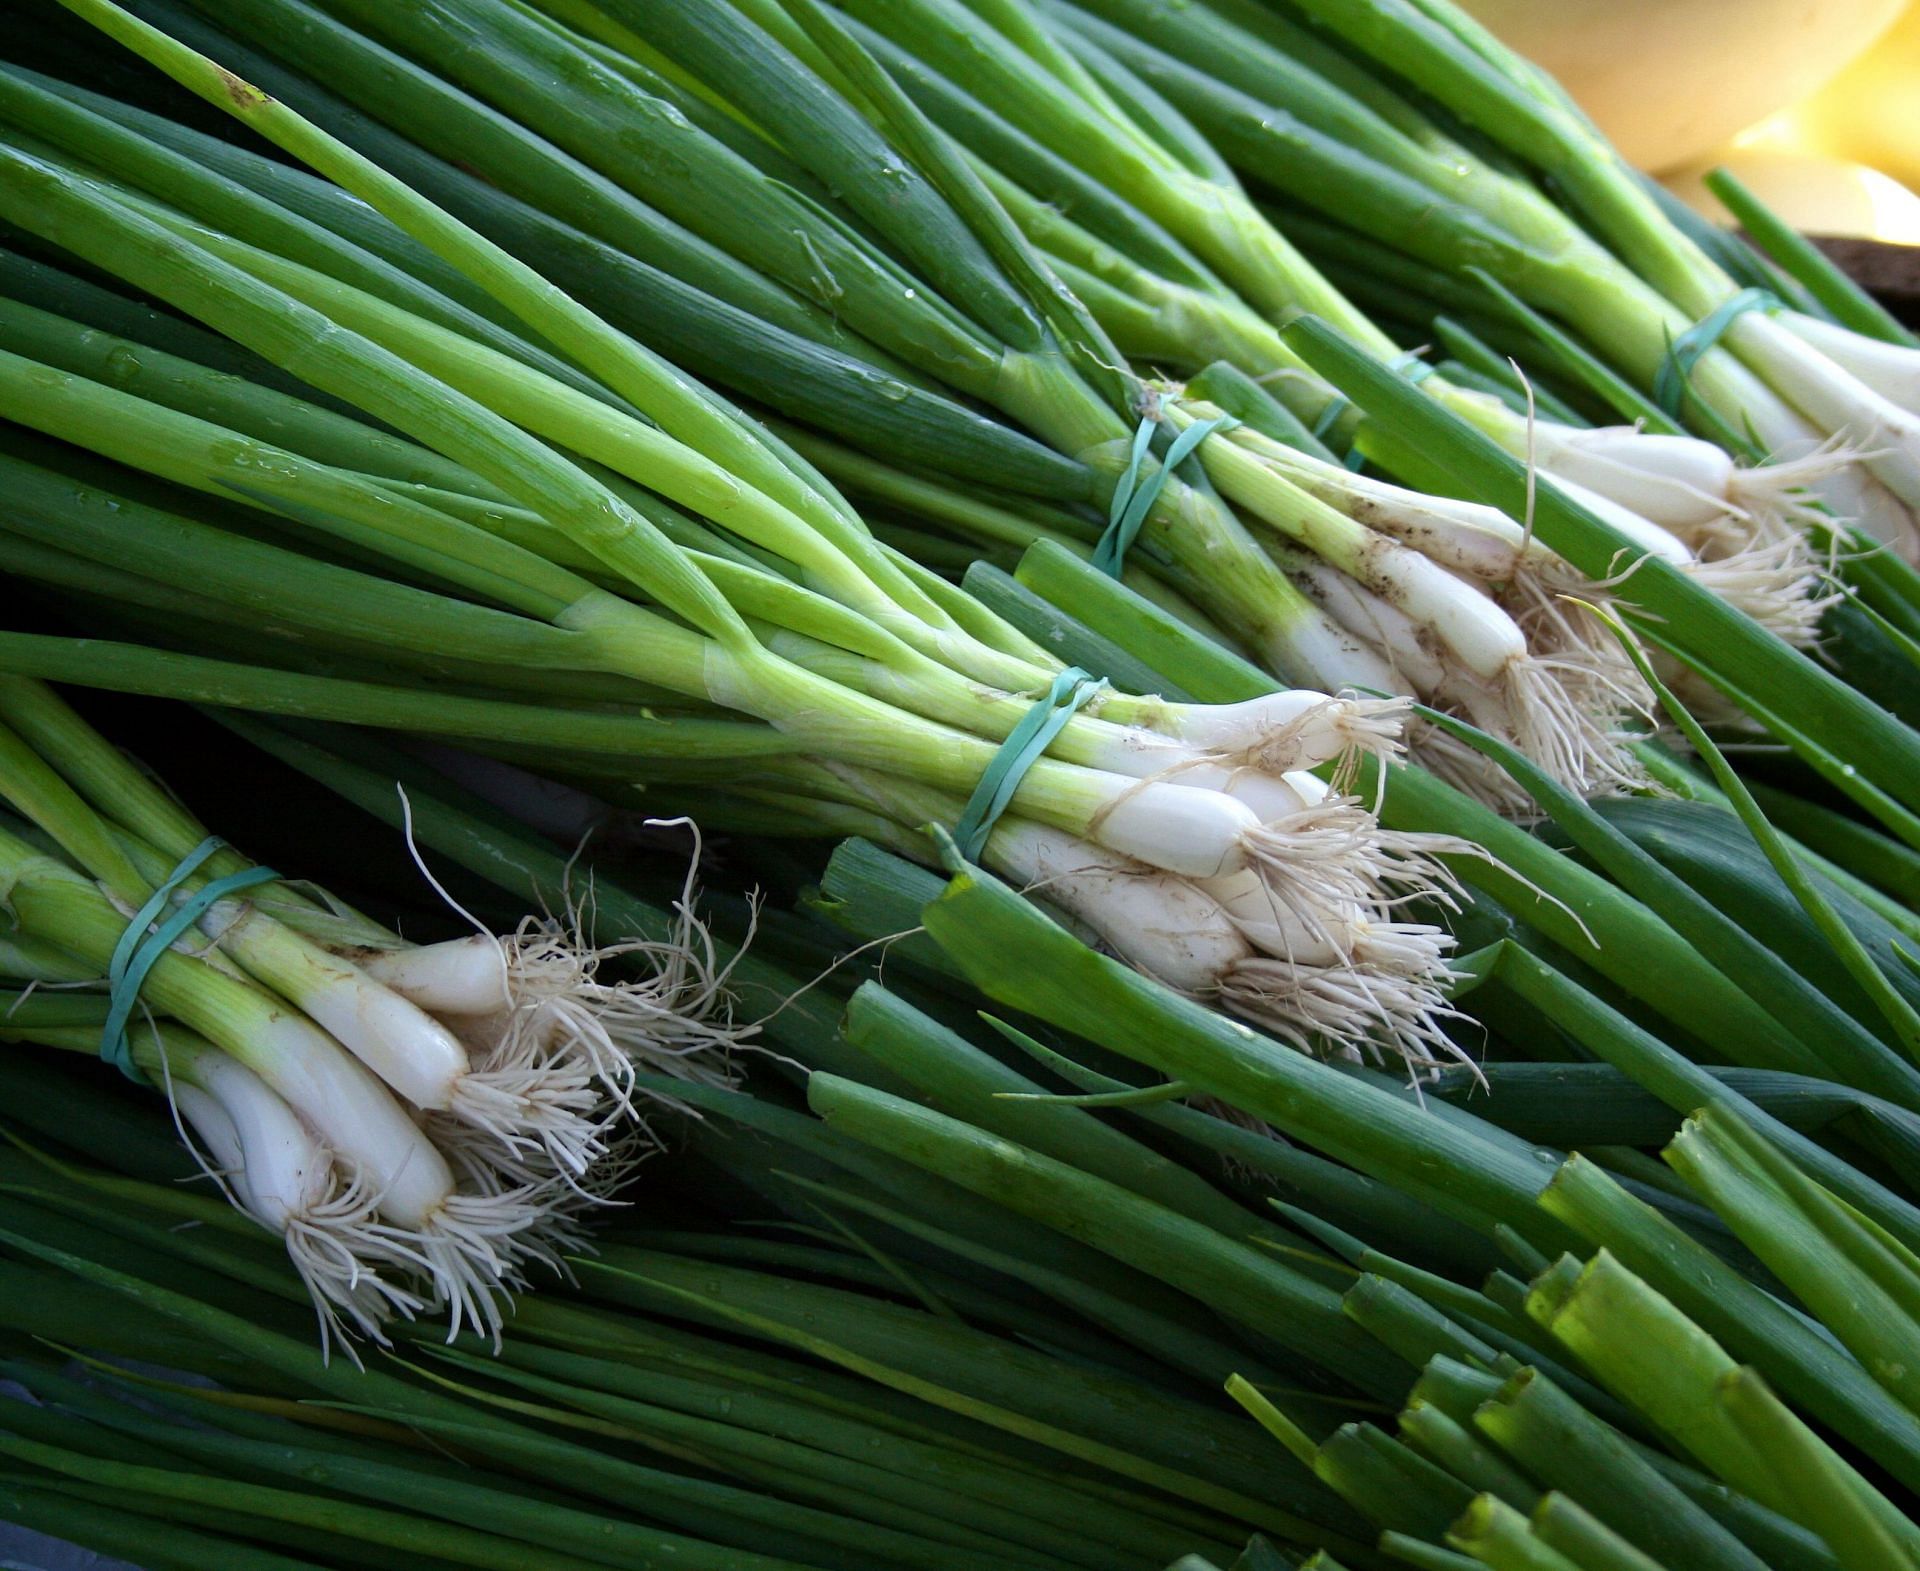 The Green Onion nutrition profile is impressive (Image via Unsplash/Christopher Previte)